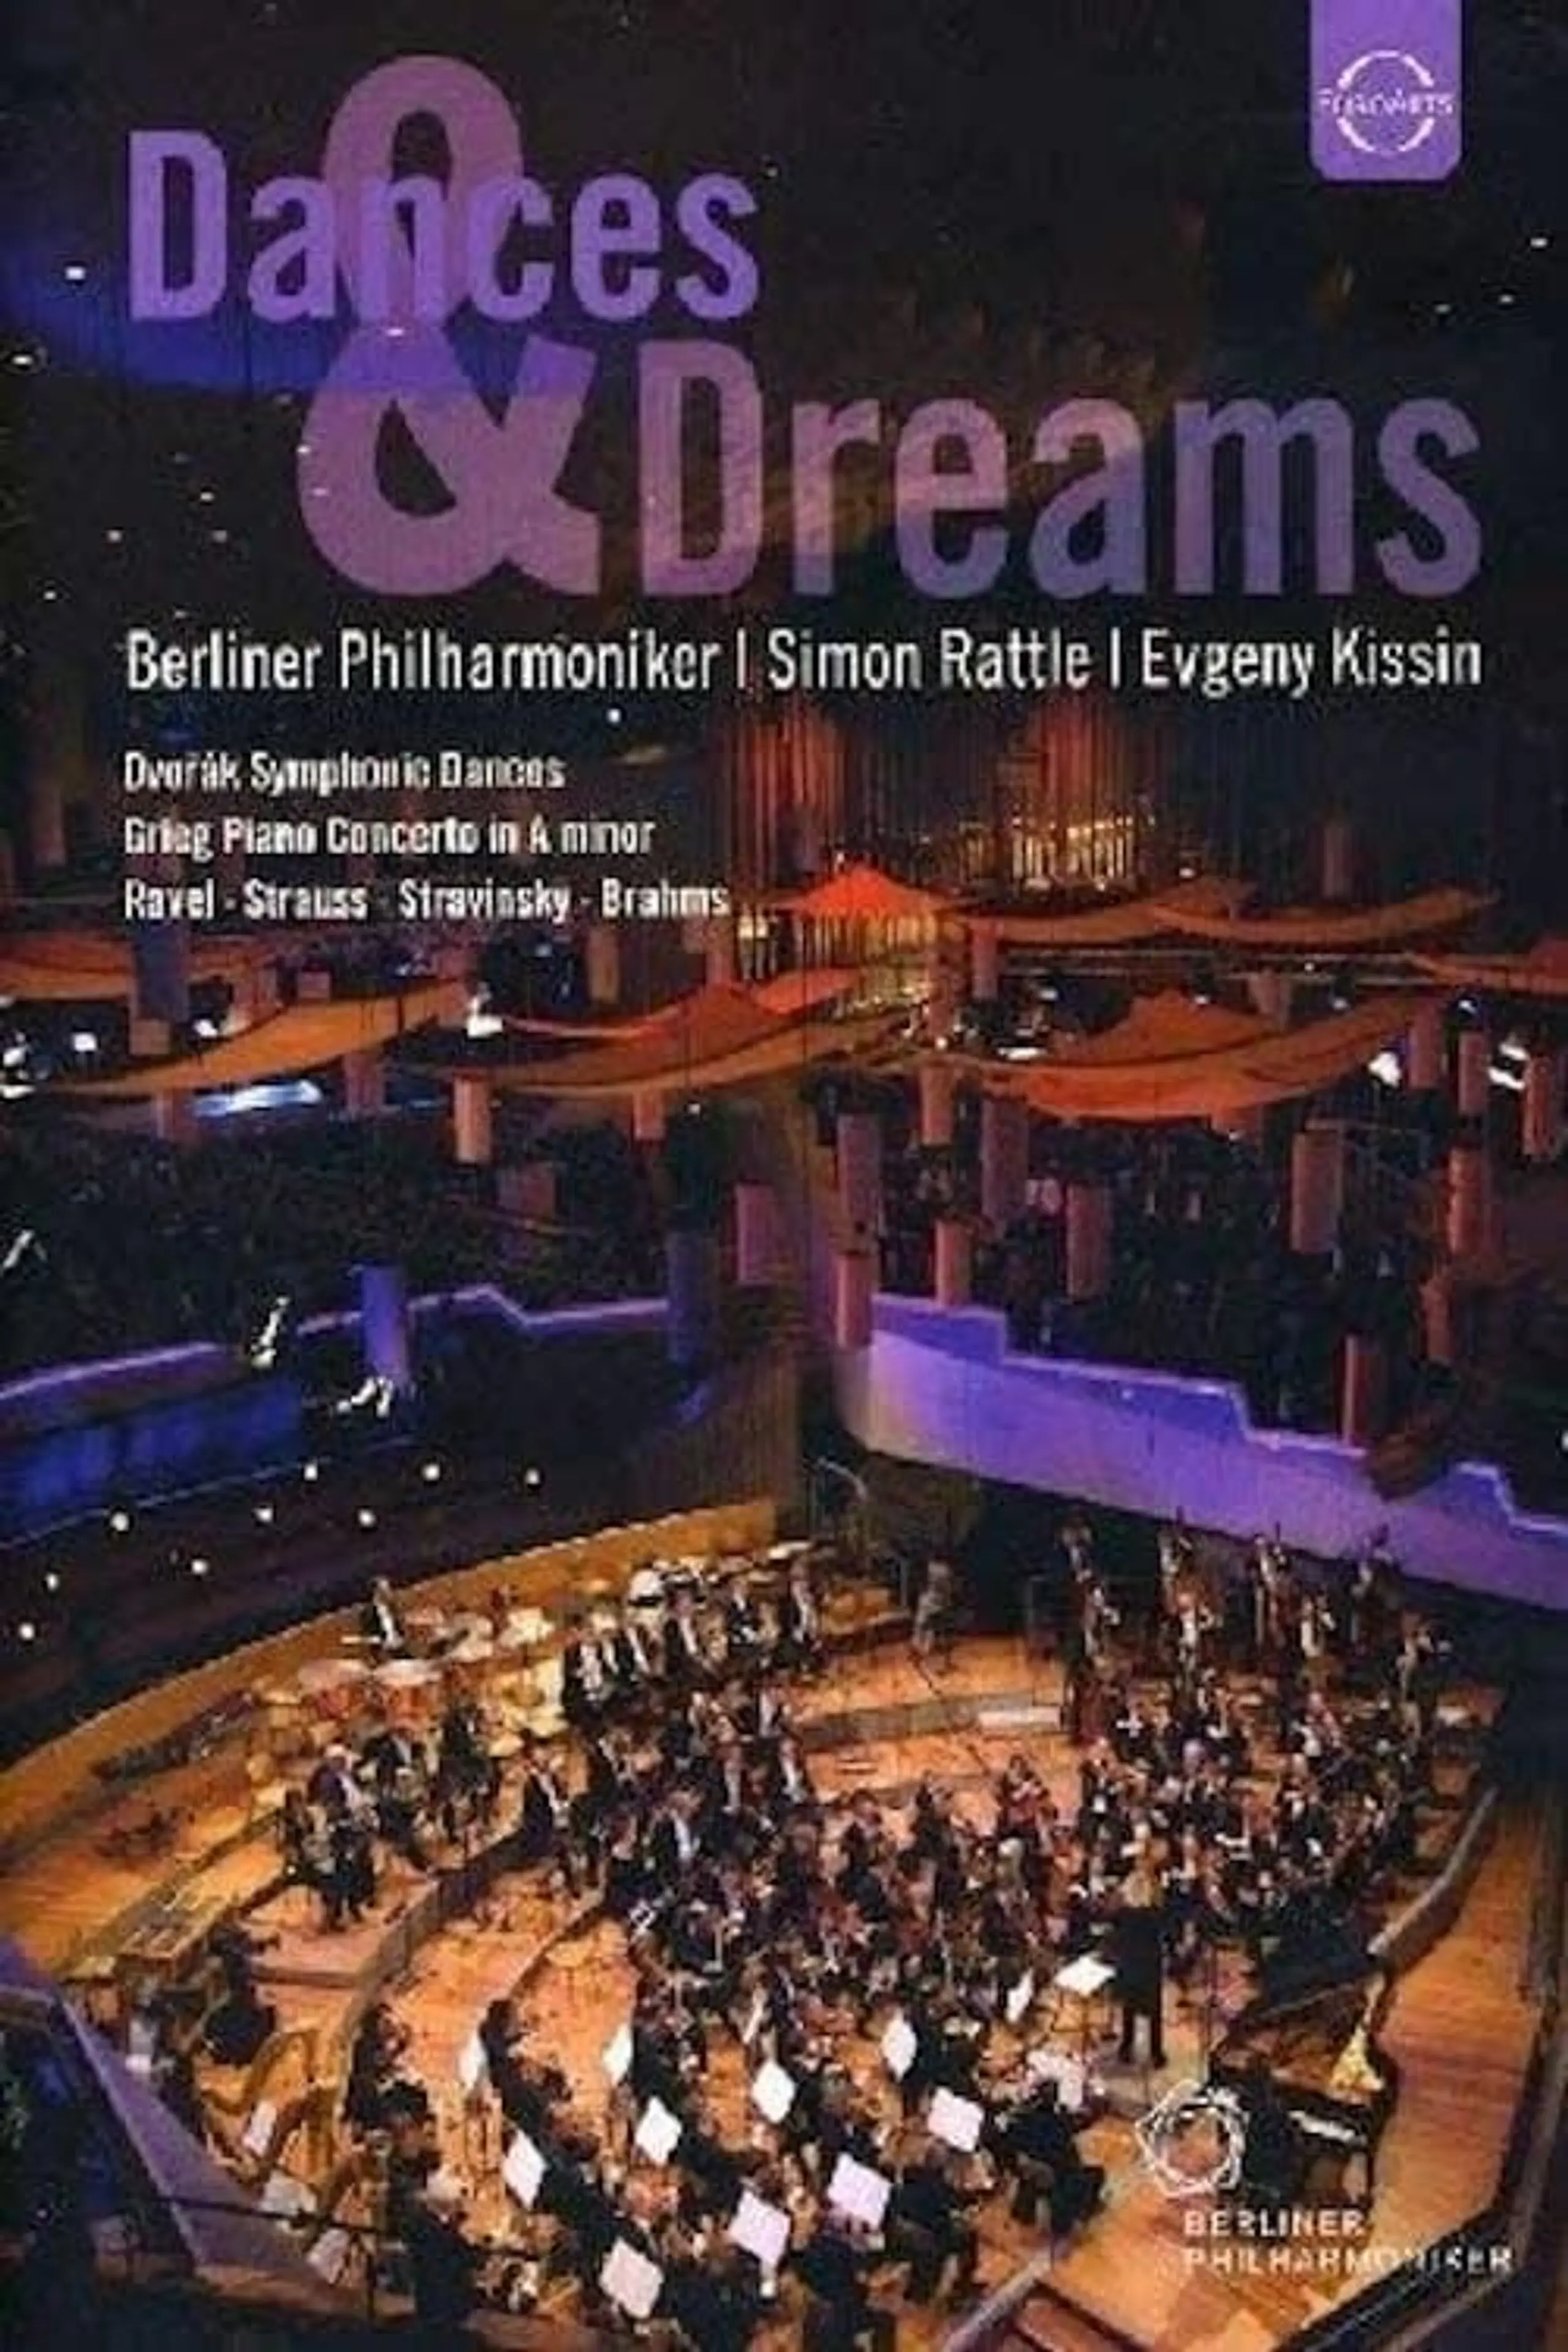 Dances and Dreams Gala from Berlin - Sylvesterconzert 2011